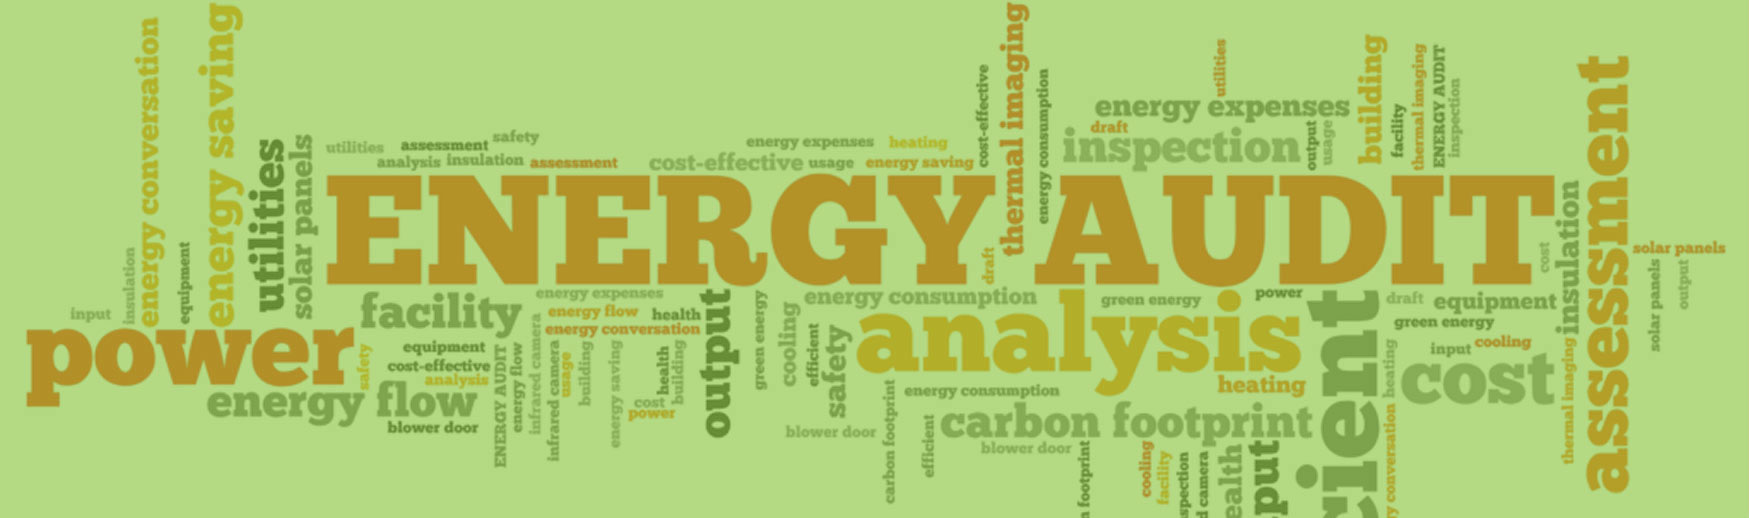 Levels of Energy Audits